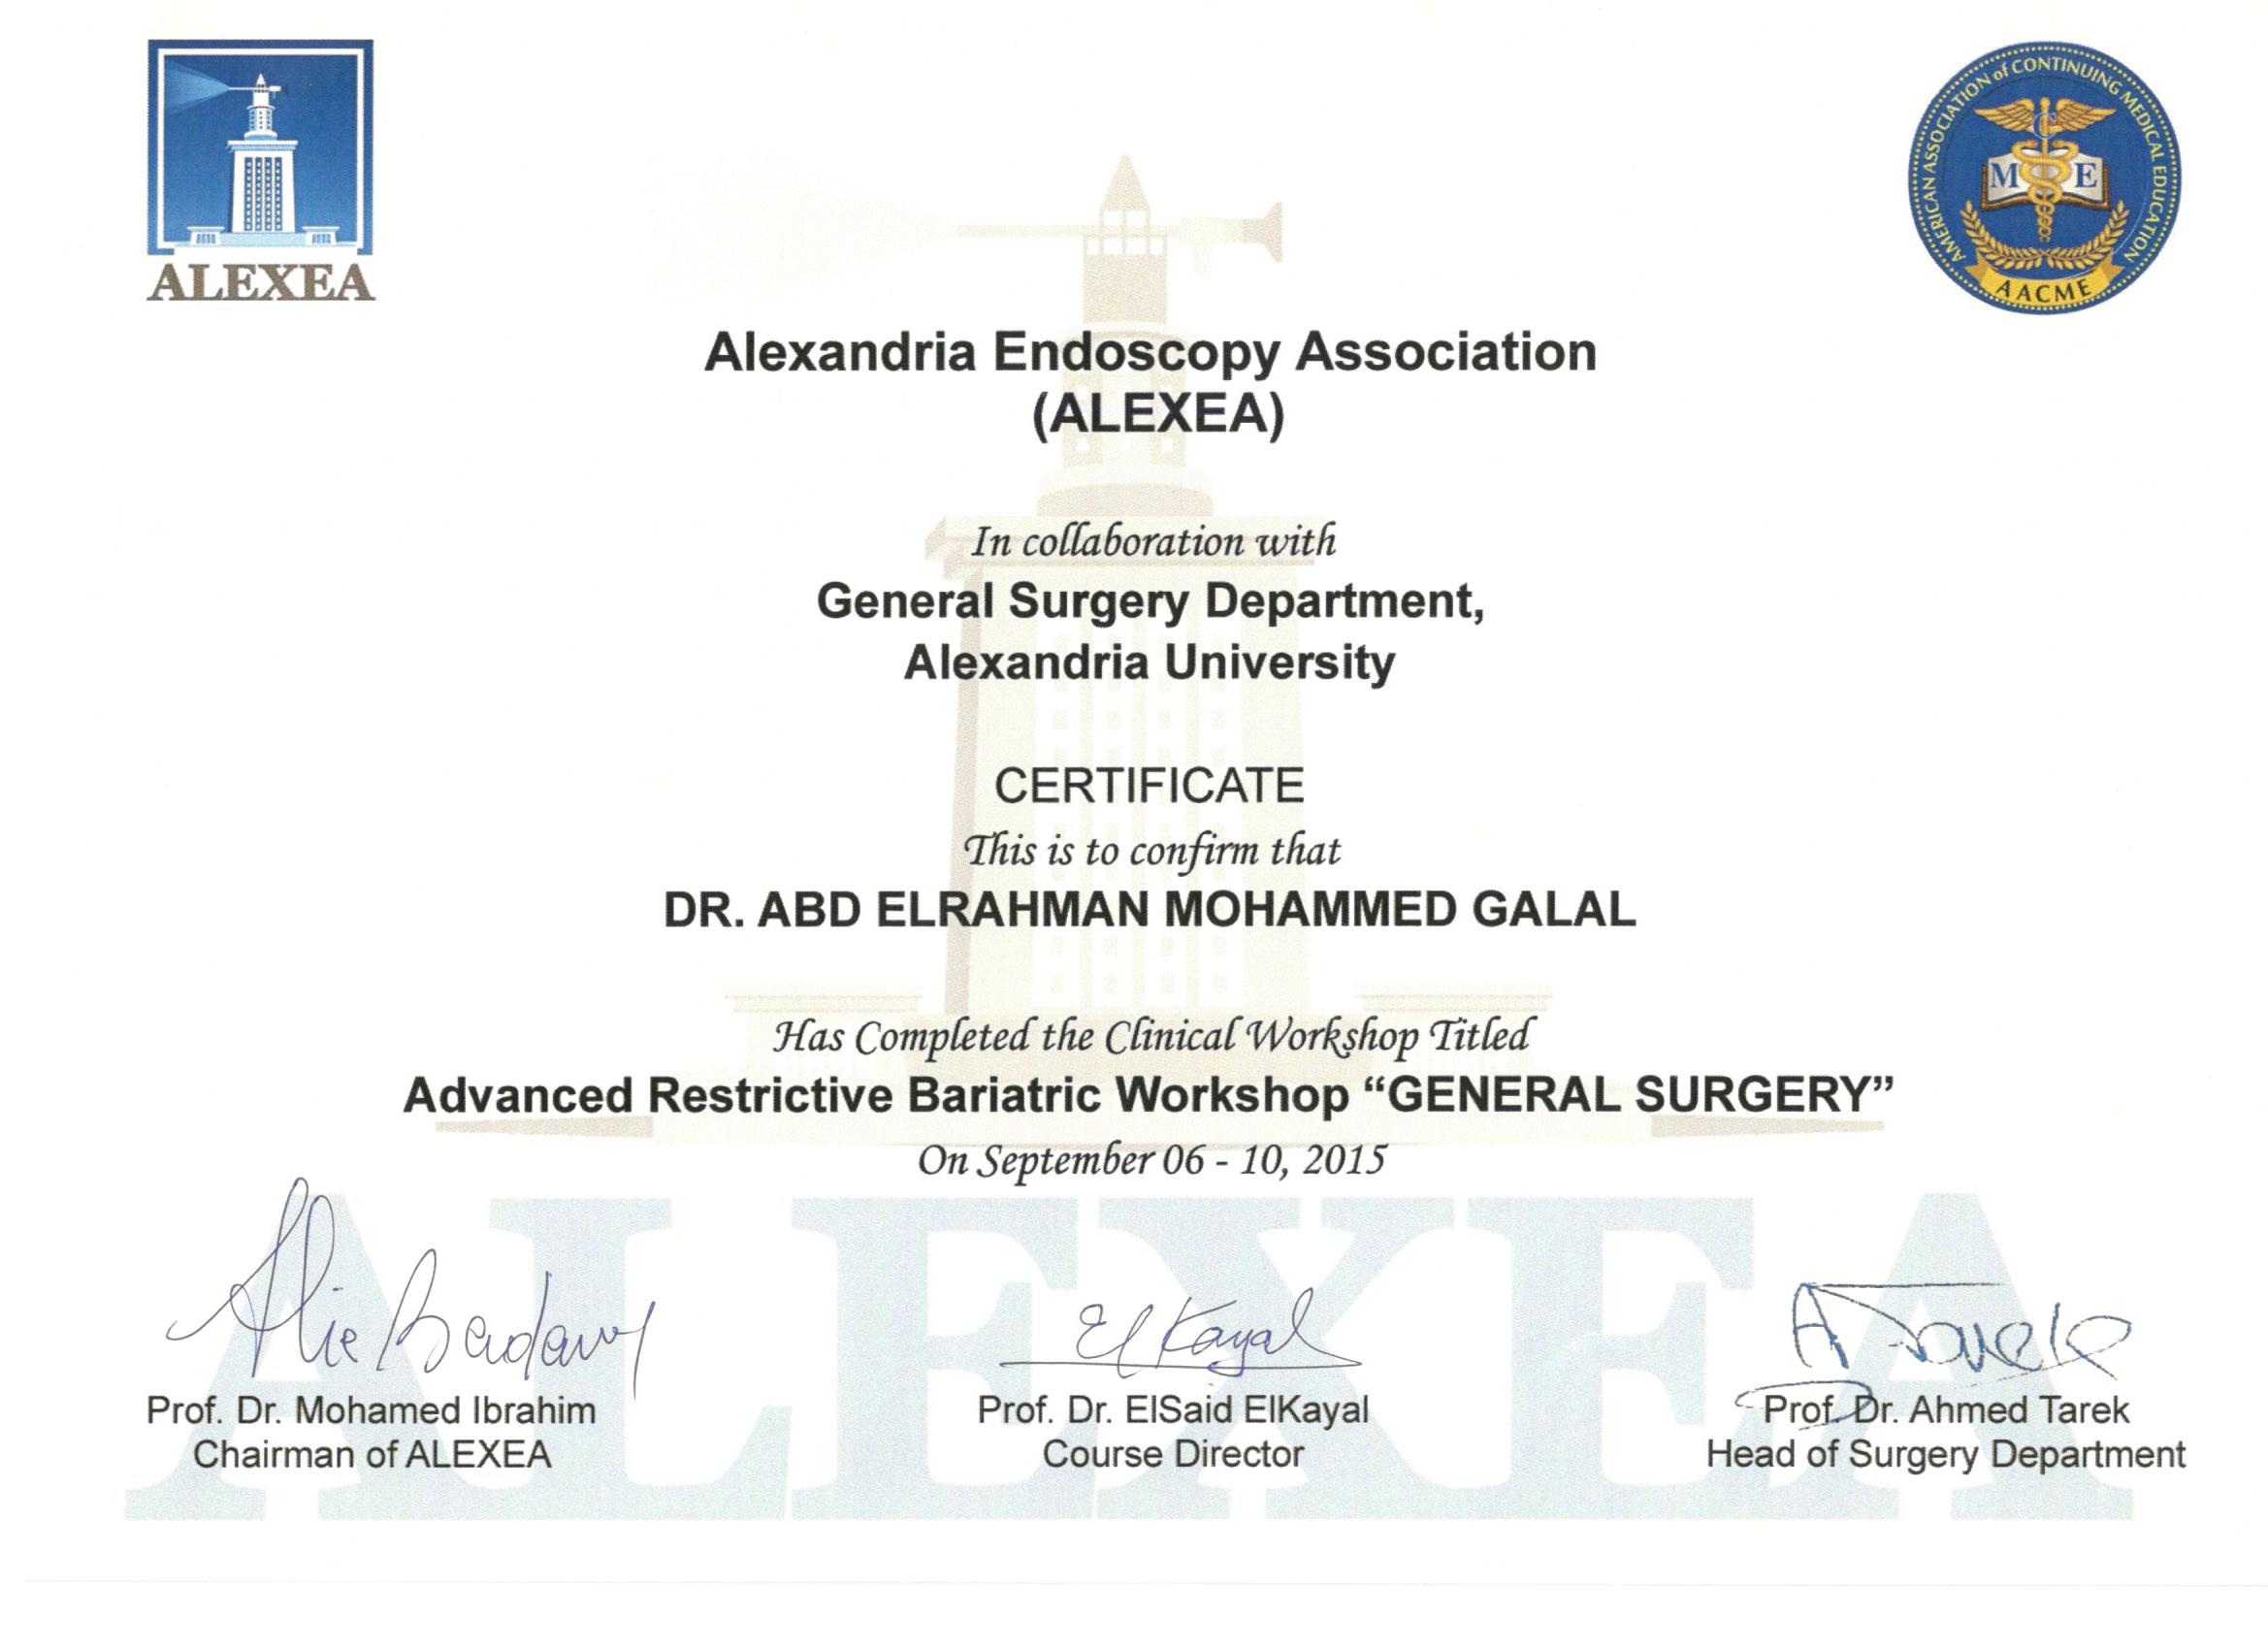 Advanced Restrictive bariatric surgery workshop